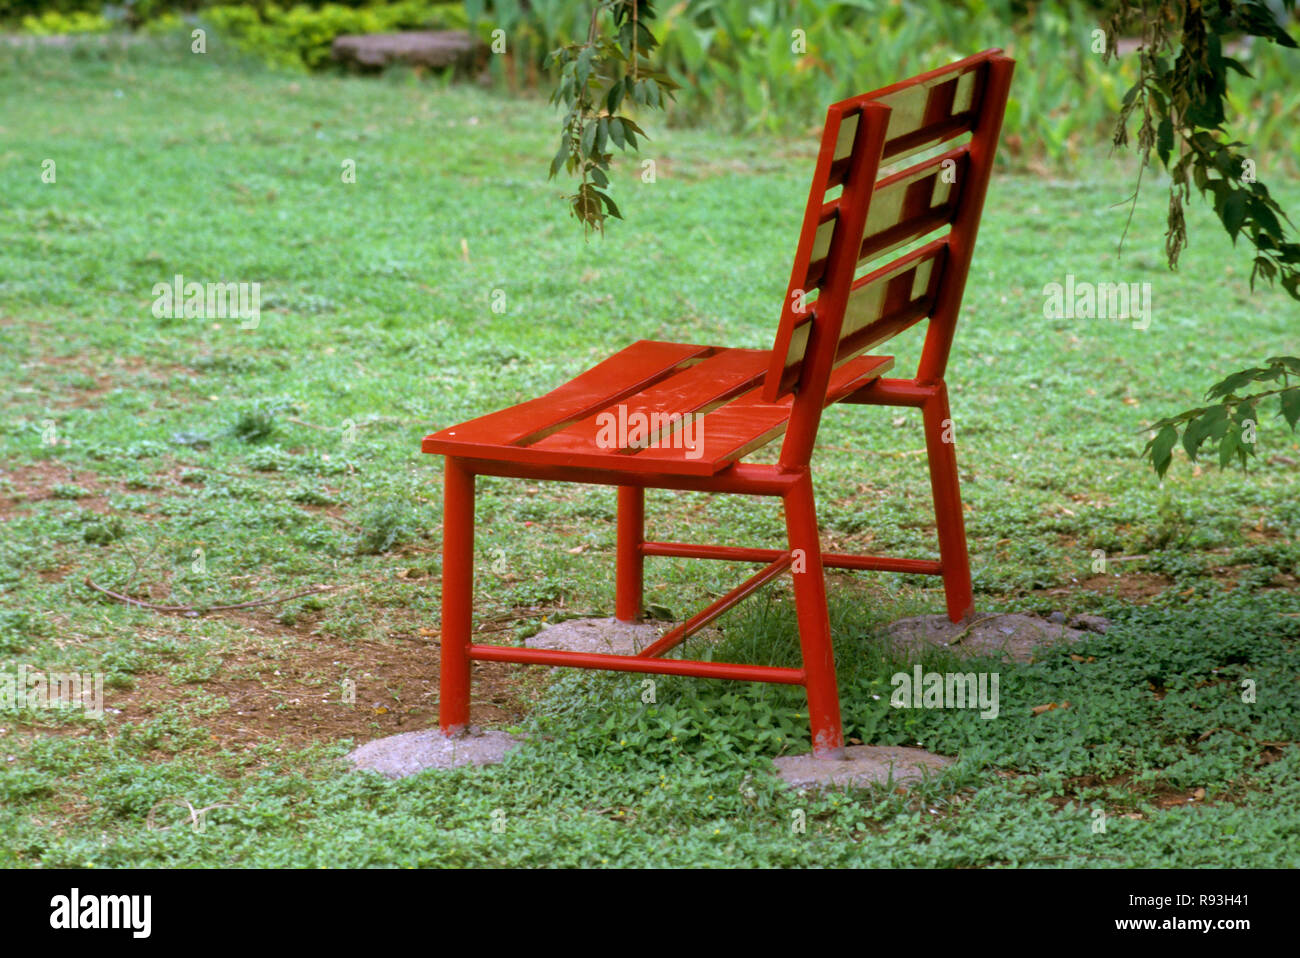 Red wooden bench in garden Stock Photo